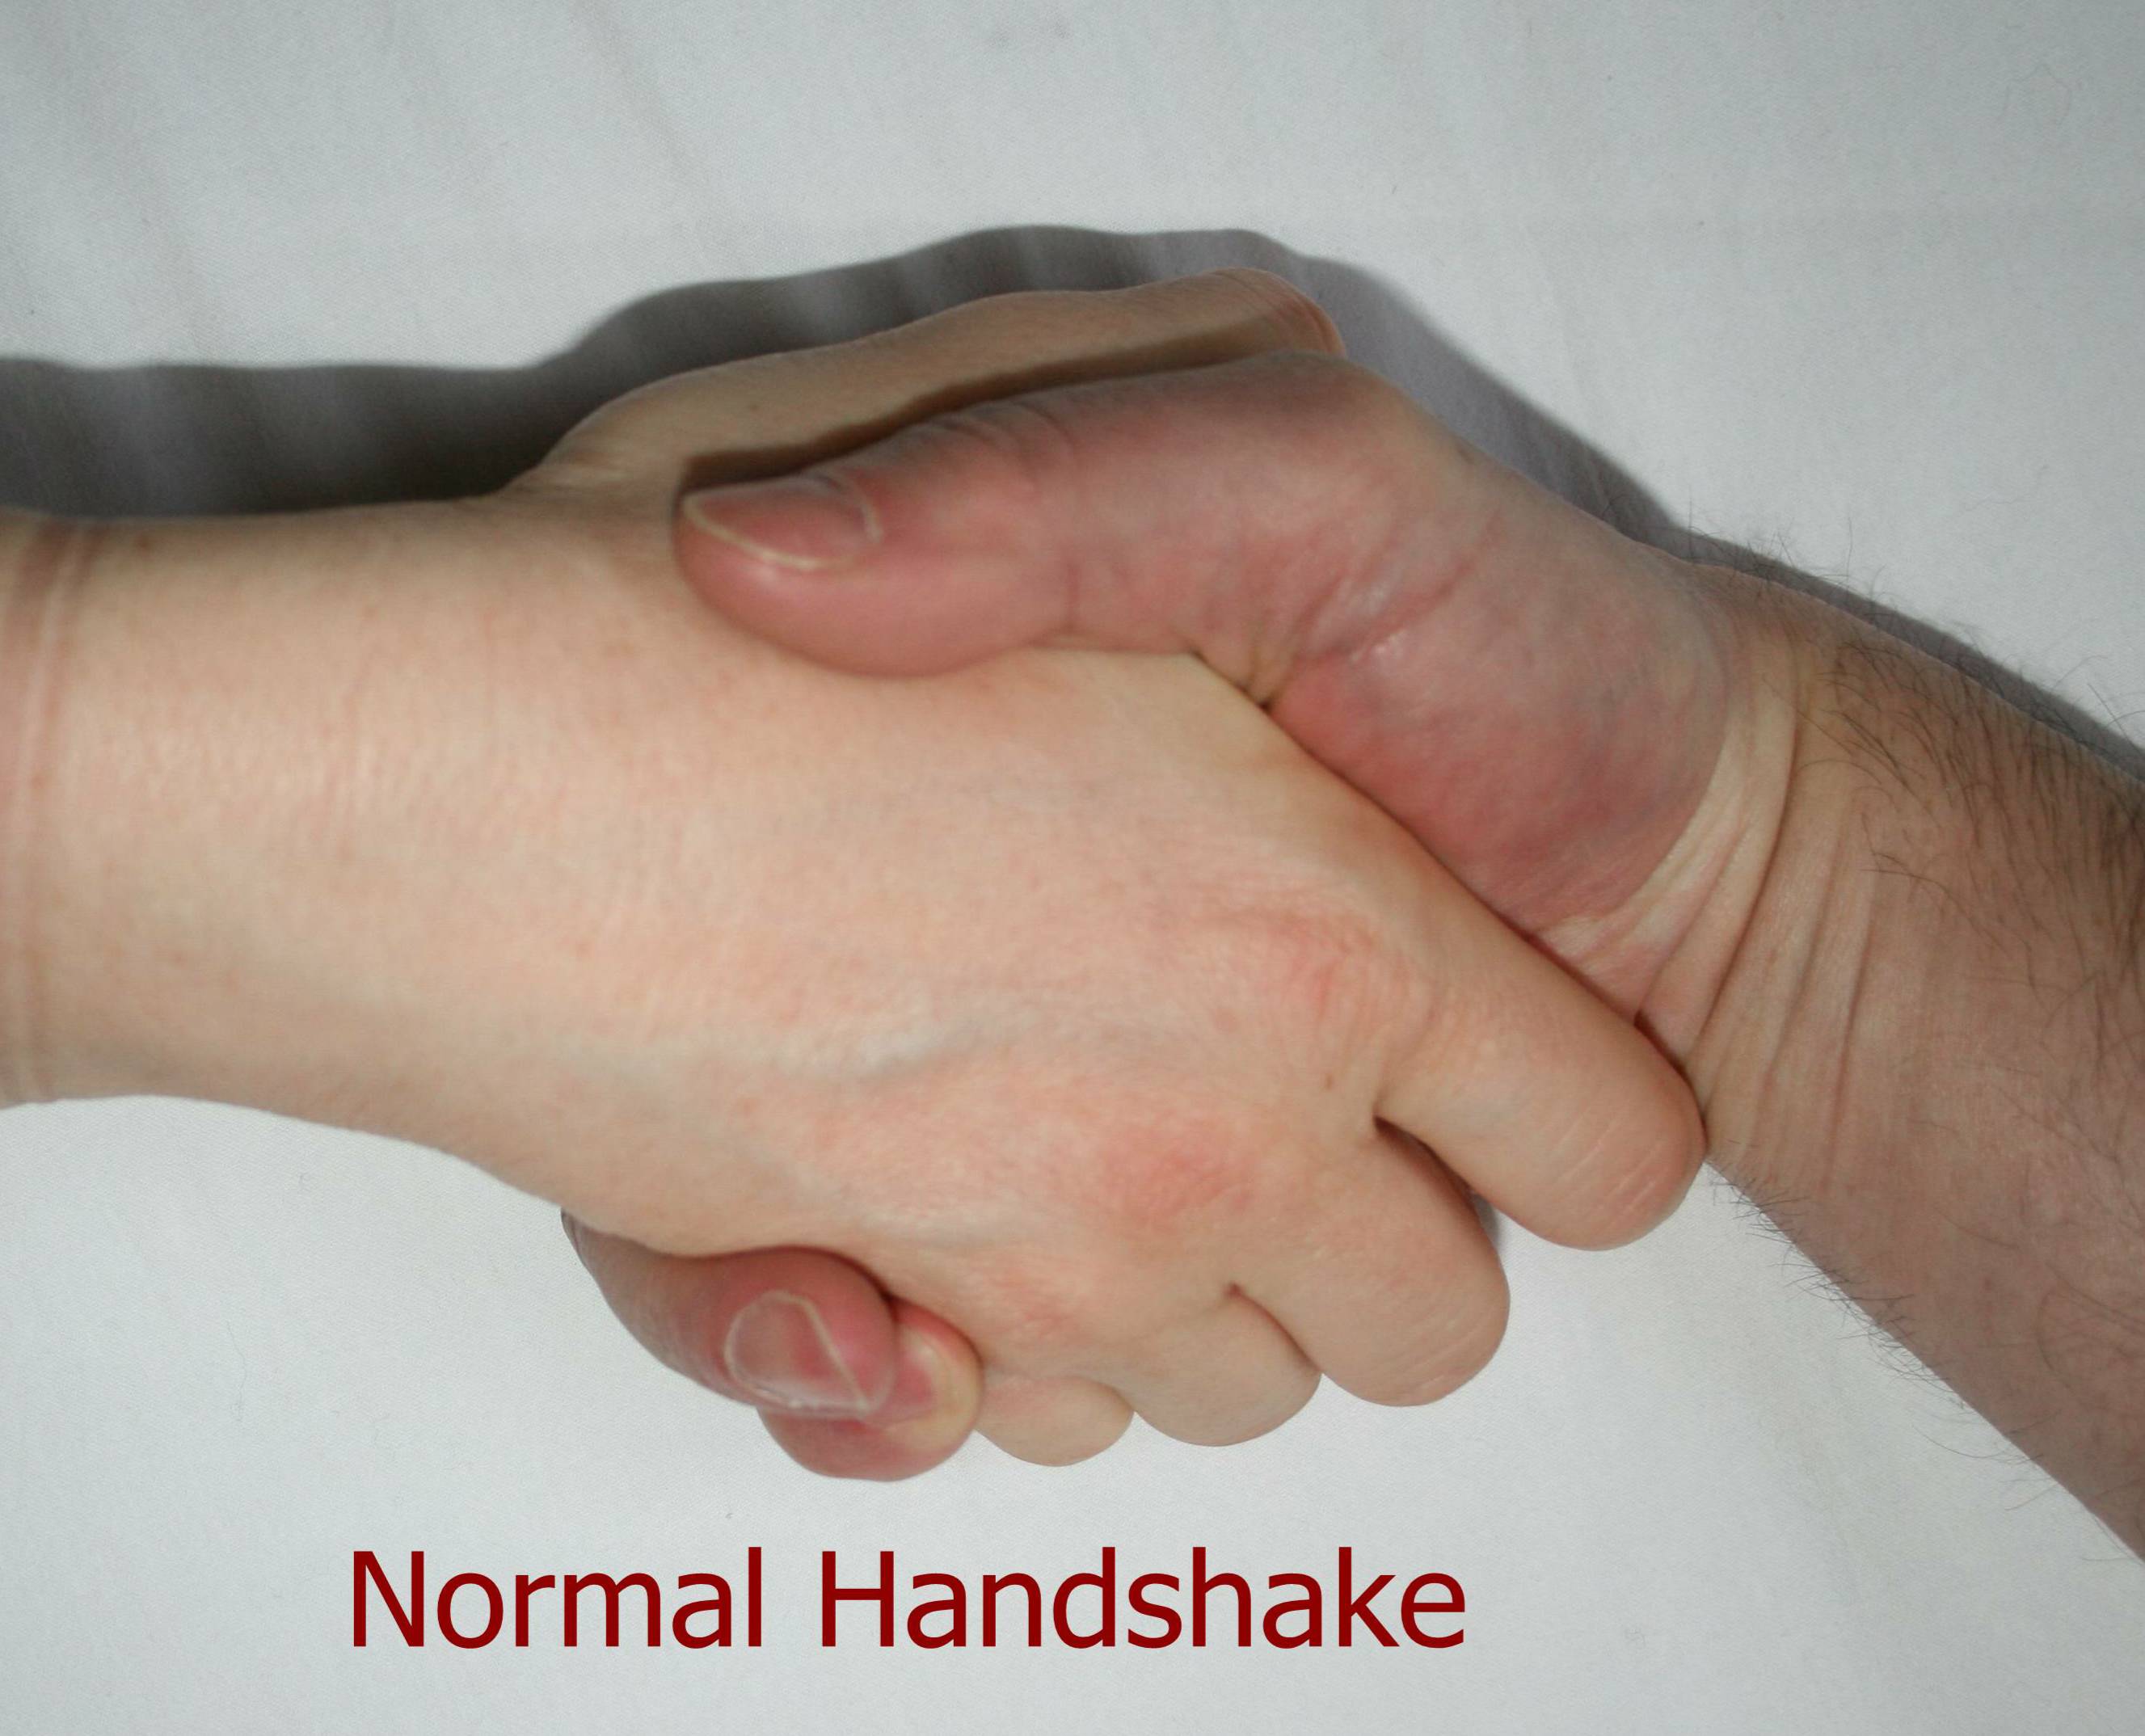 Hand Shake Sex Videos - Yuvutu Secret Handshake - Mature On Yuvutu Homemade Amateur Porn ...